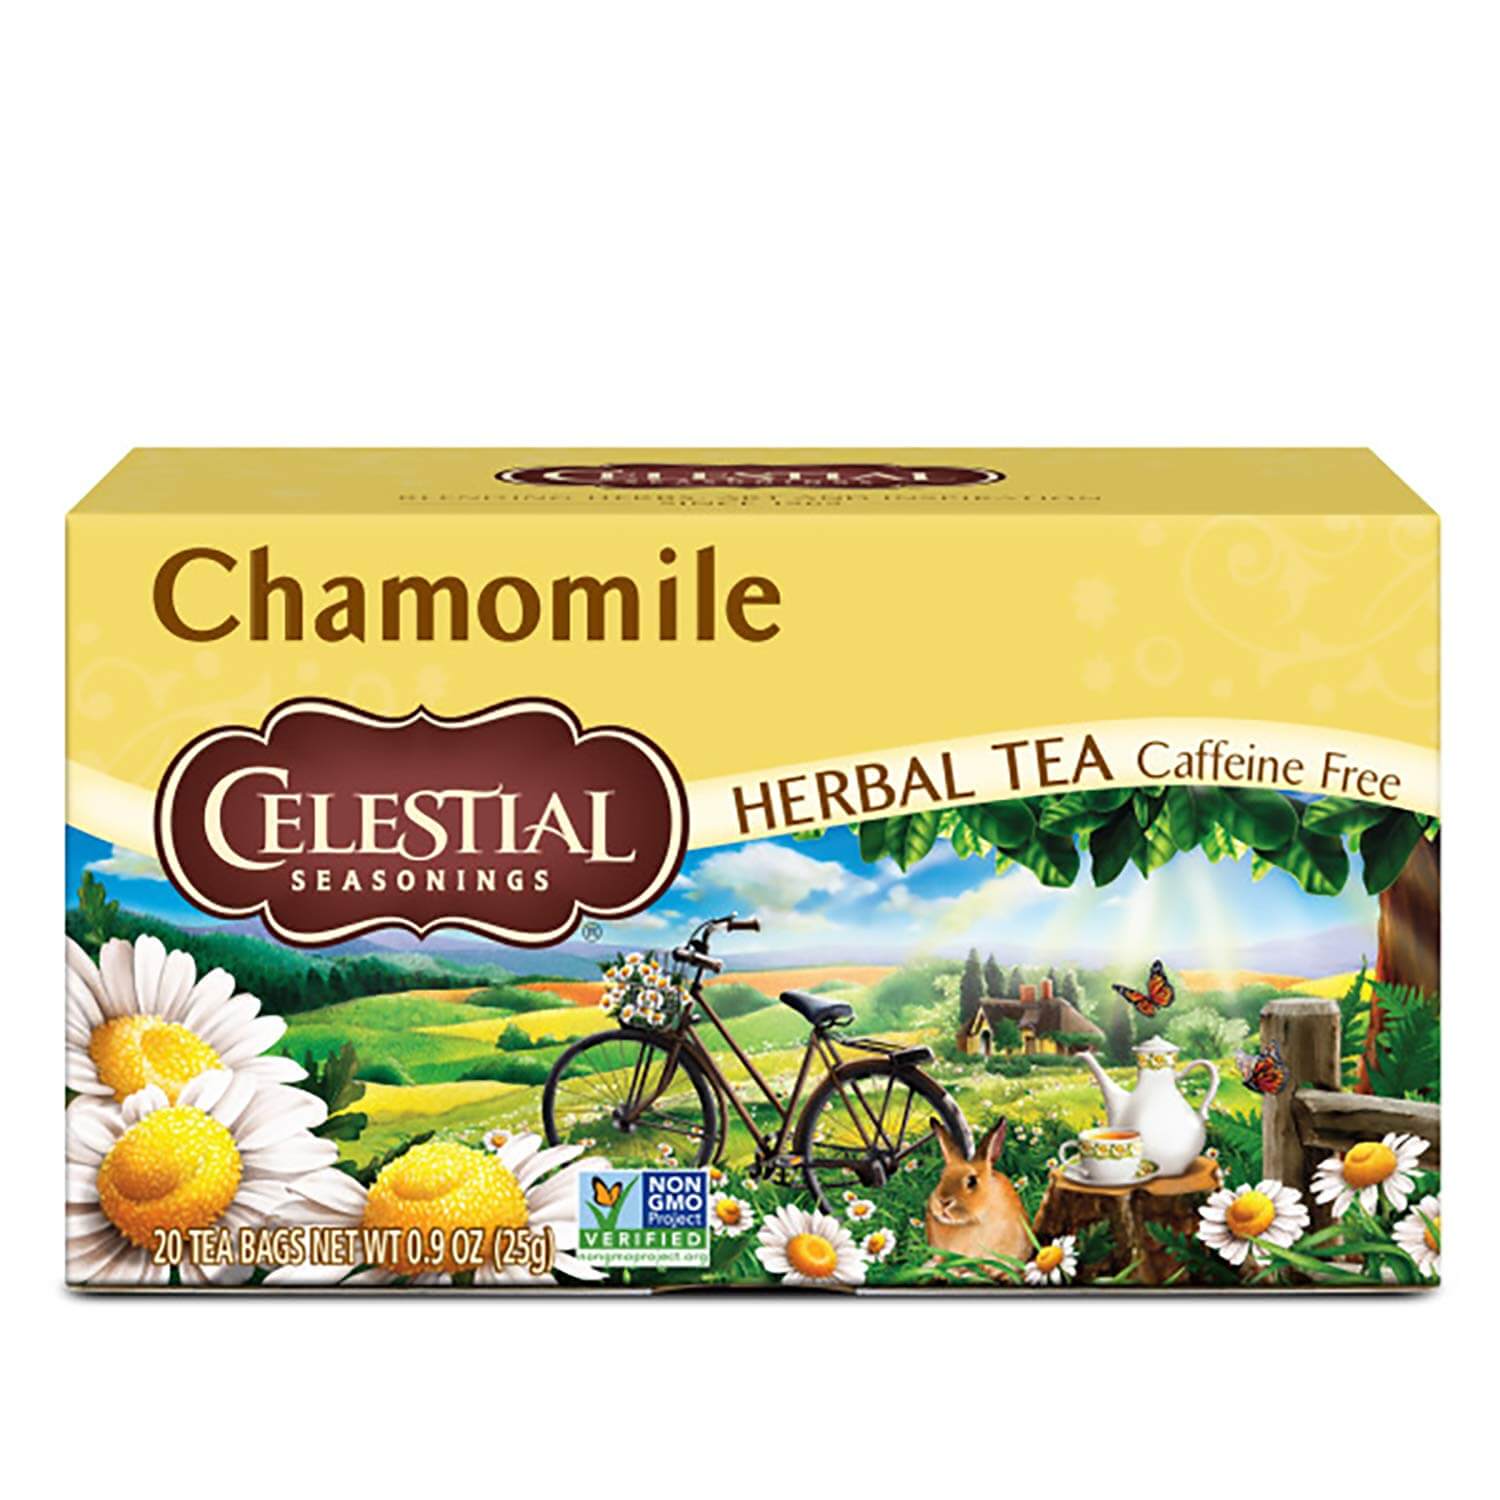 Amazon's Choice: Celestial Seasonings Chamomile Tea